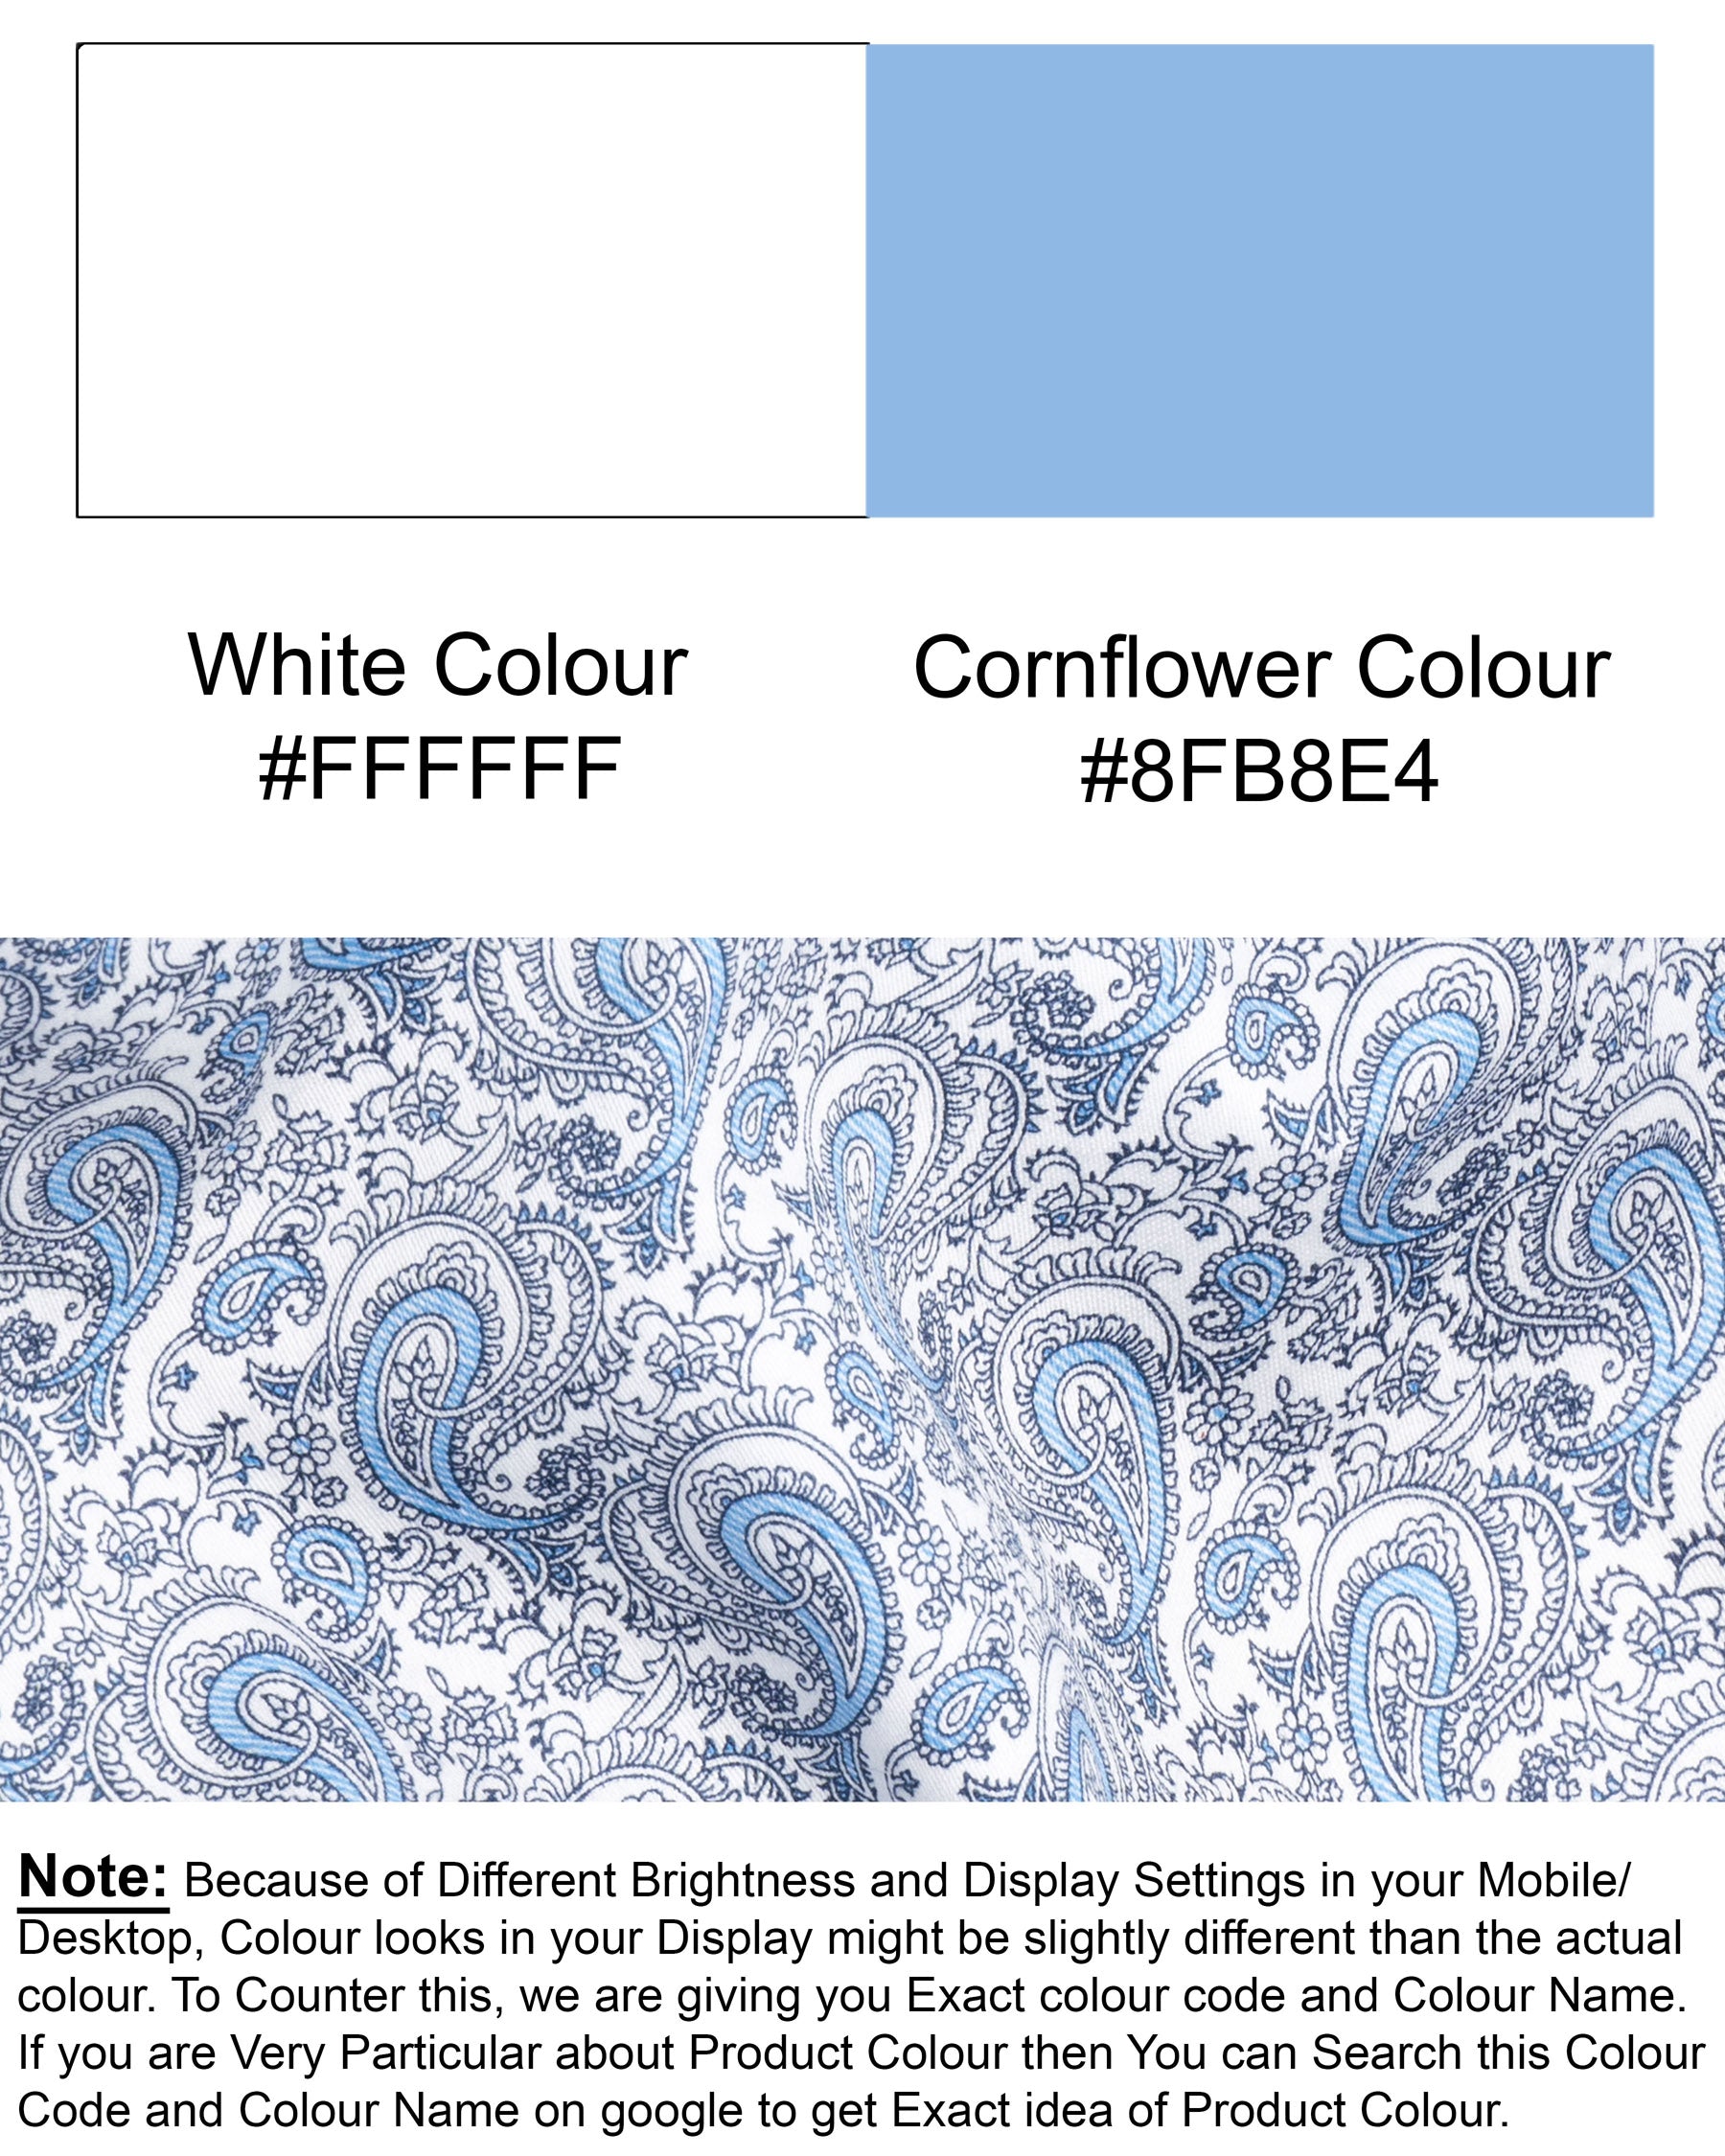 Bright White and Cornflower Blue Paisleys Printed Super Soft Premium Cotton Shirt 5908-M-38, 5908-M-H-38, 5908-M-39, 5908-M-H-39, 5908-M-40, 5908-M-H-40, 5908-M-42, 5908-M-H-42, 5908-M-44, 5908-M-H-44, 5908-M-46, 5908-M-H-46, 5908-M-48, 5908-M-H-48, 5908-M-50, 5908-M-H-50, 5908-M-52, 5908-M-H-52